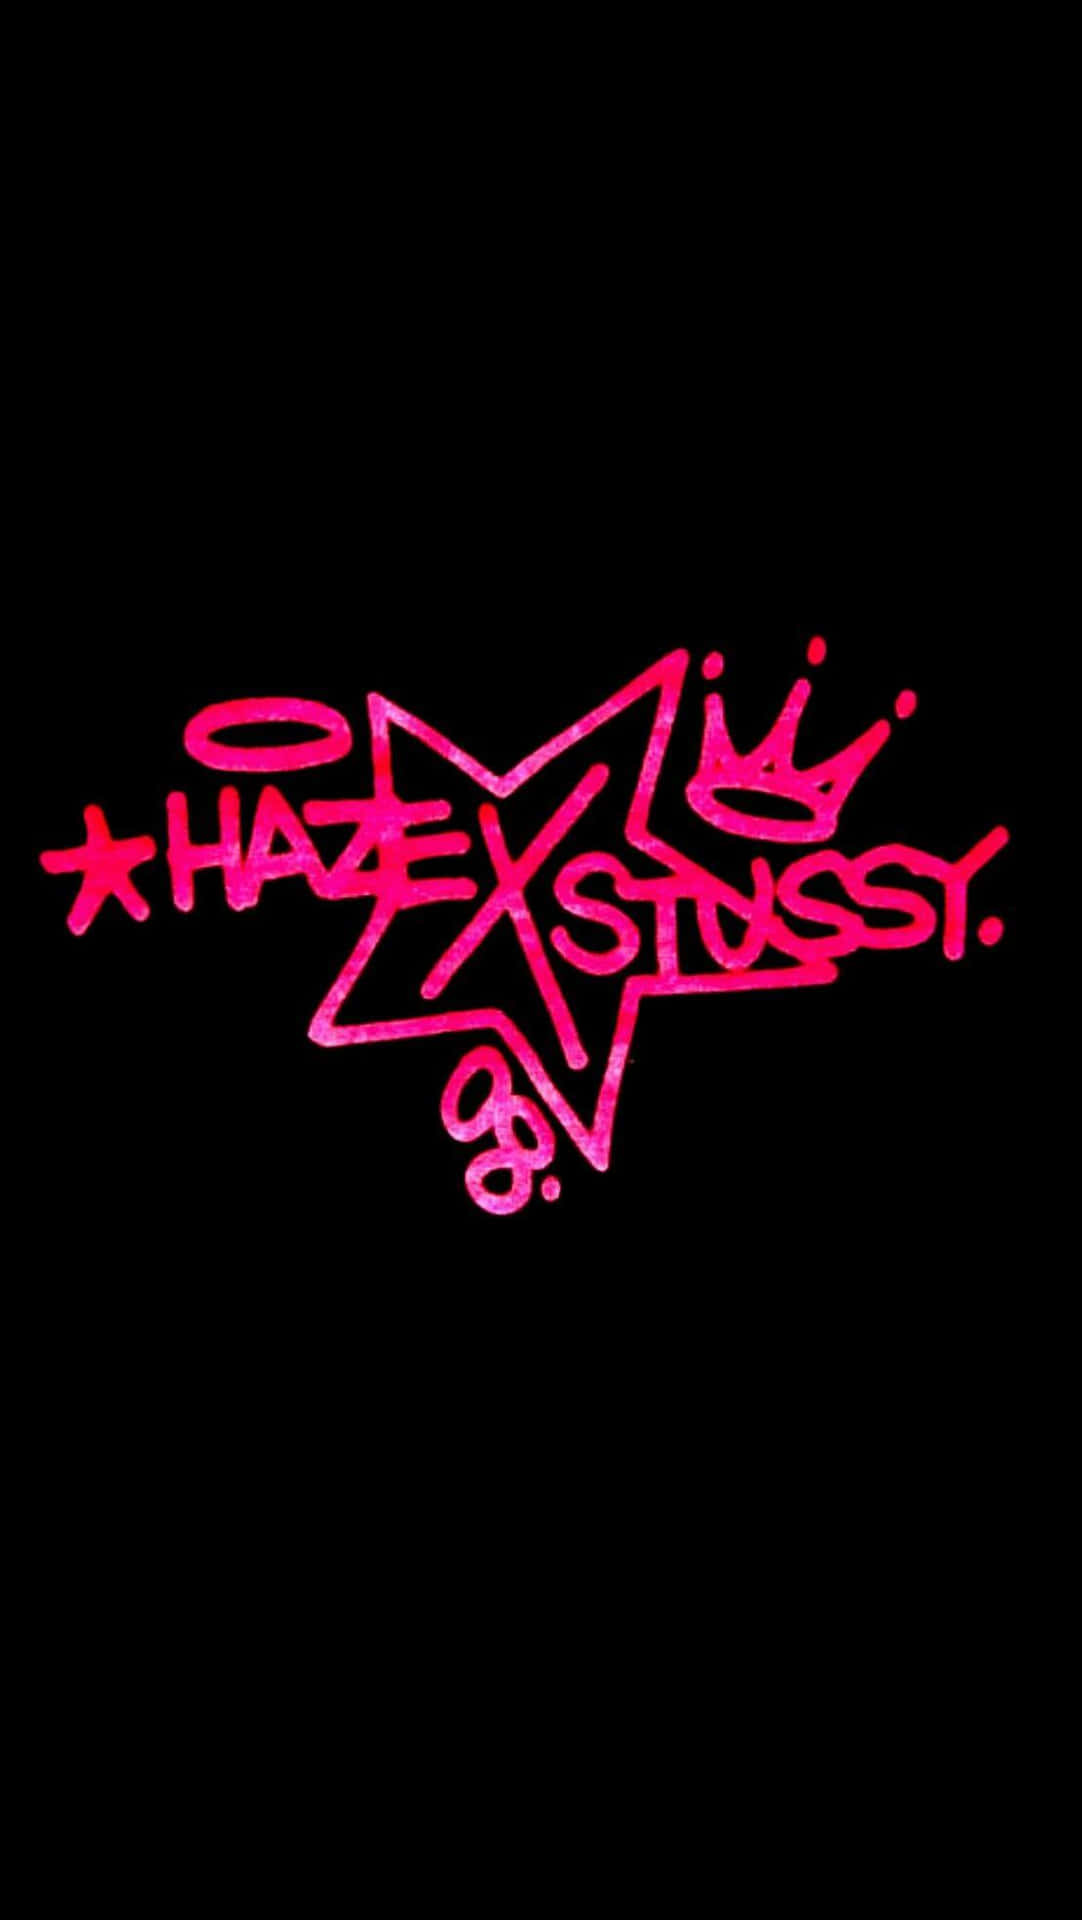 Hazex Stussy Collaboration Logo Wallpaper